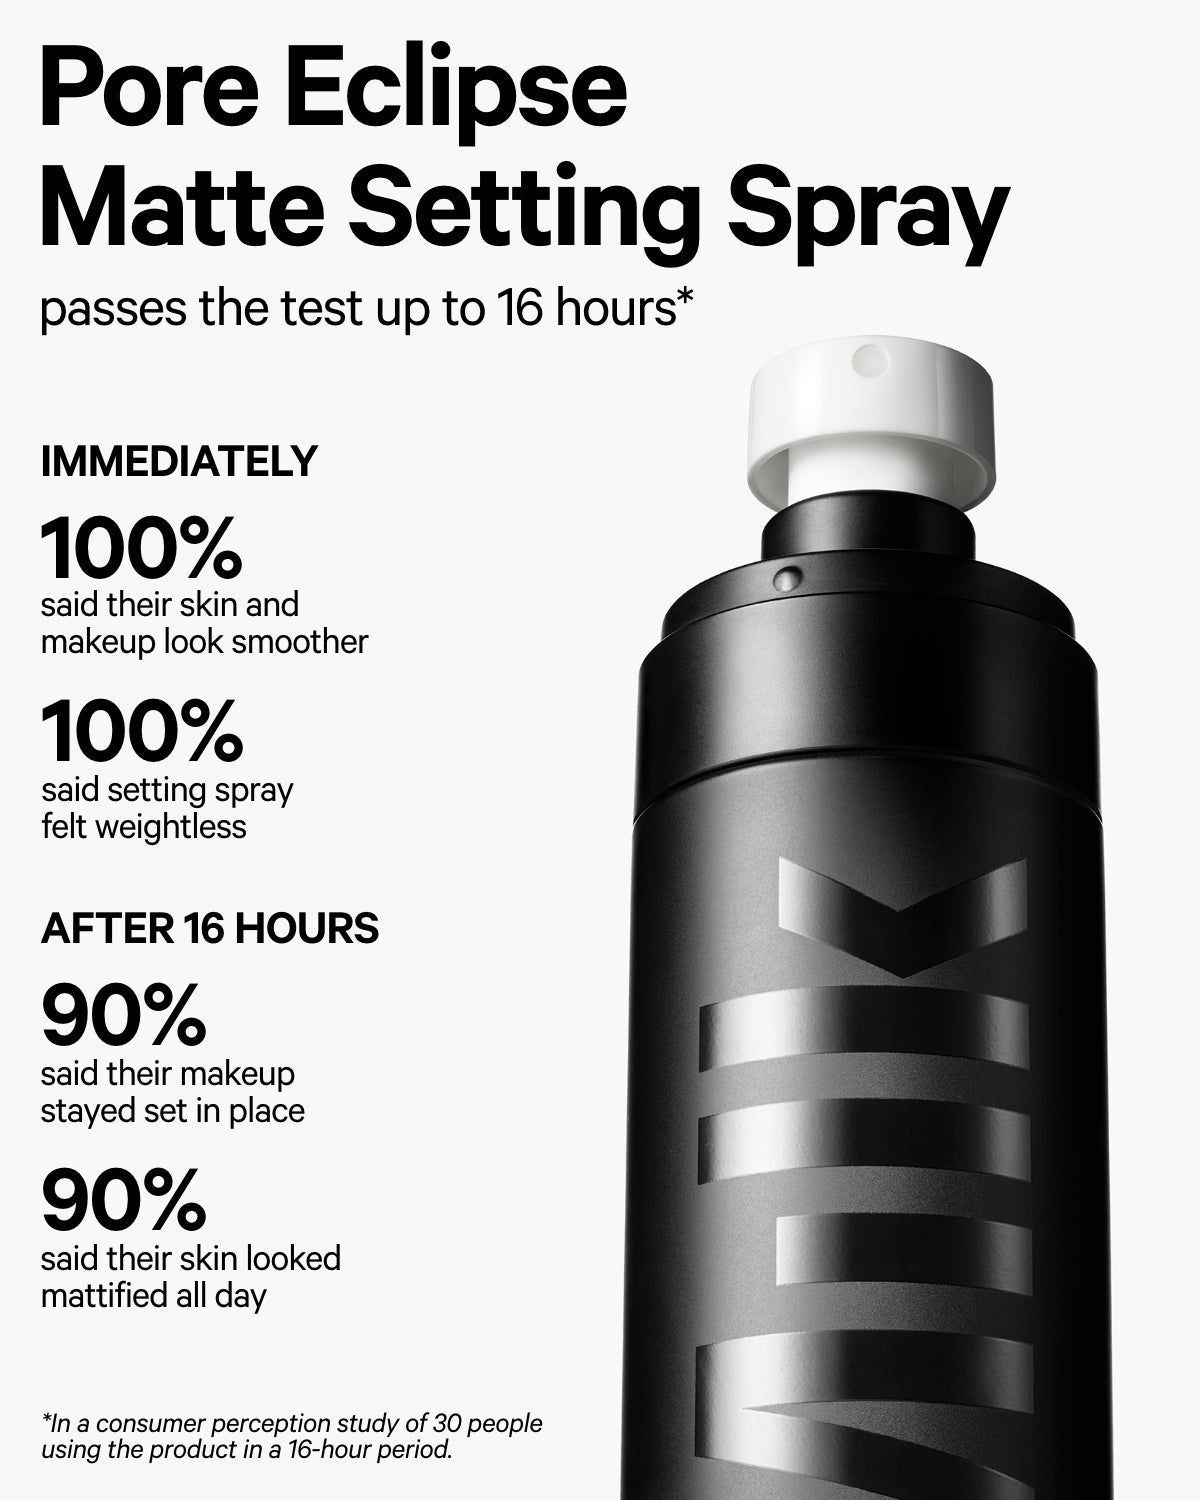 Pore Eclipse Matte Setting Spray Infographic | Milk Makeup